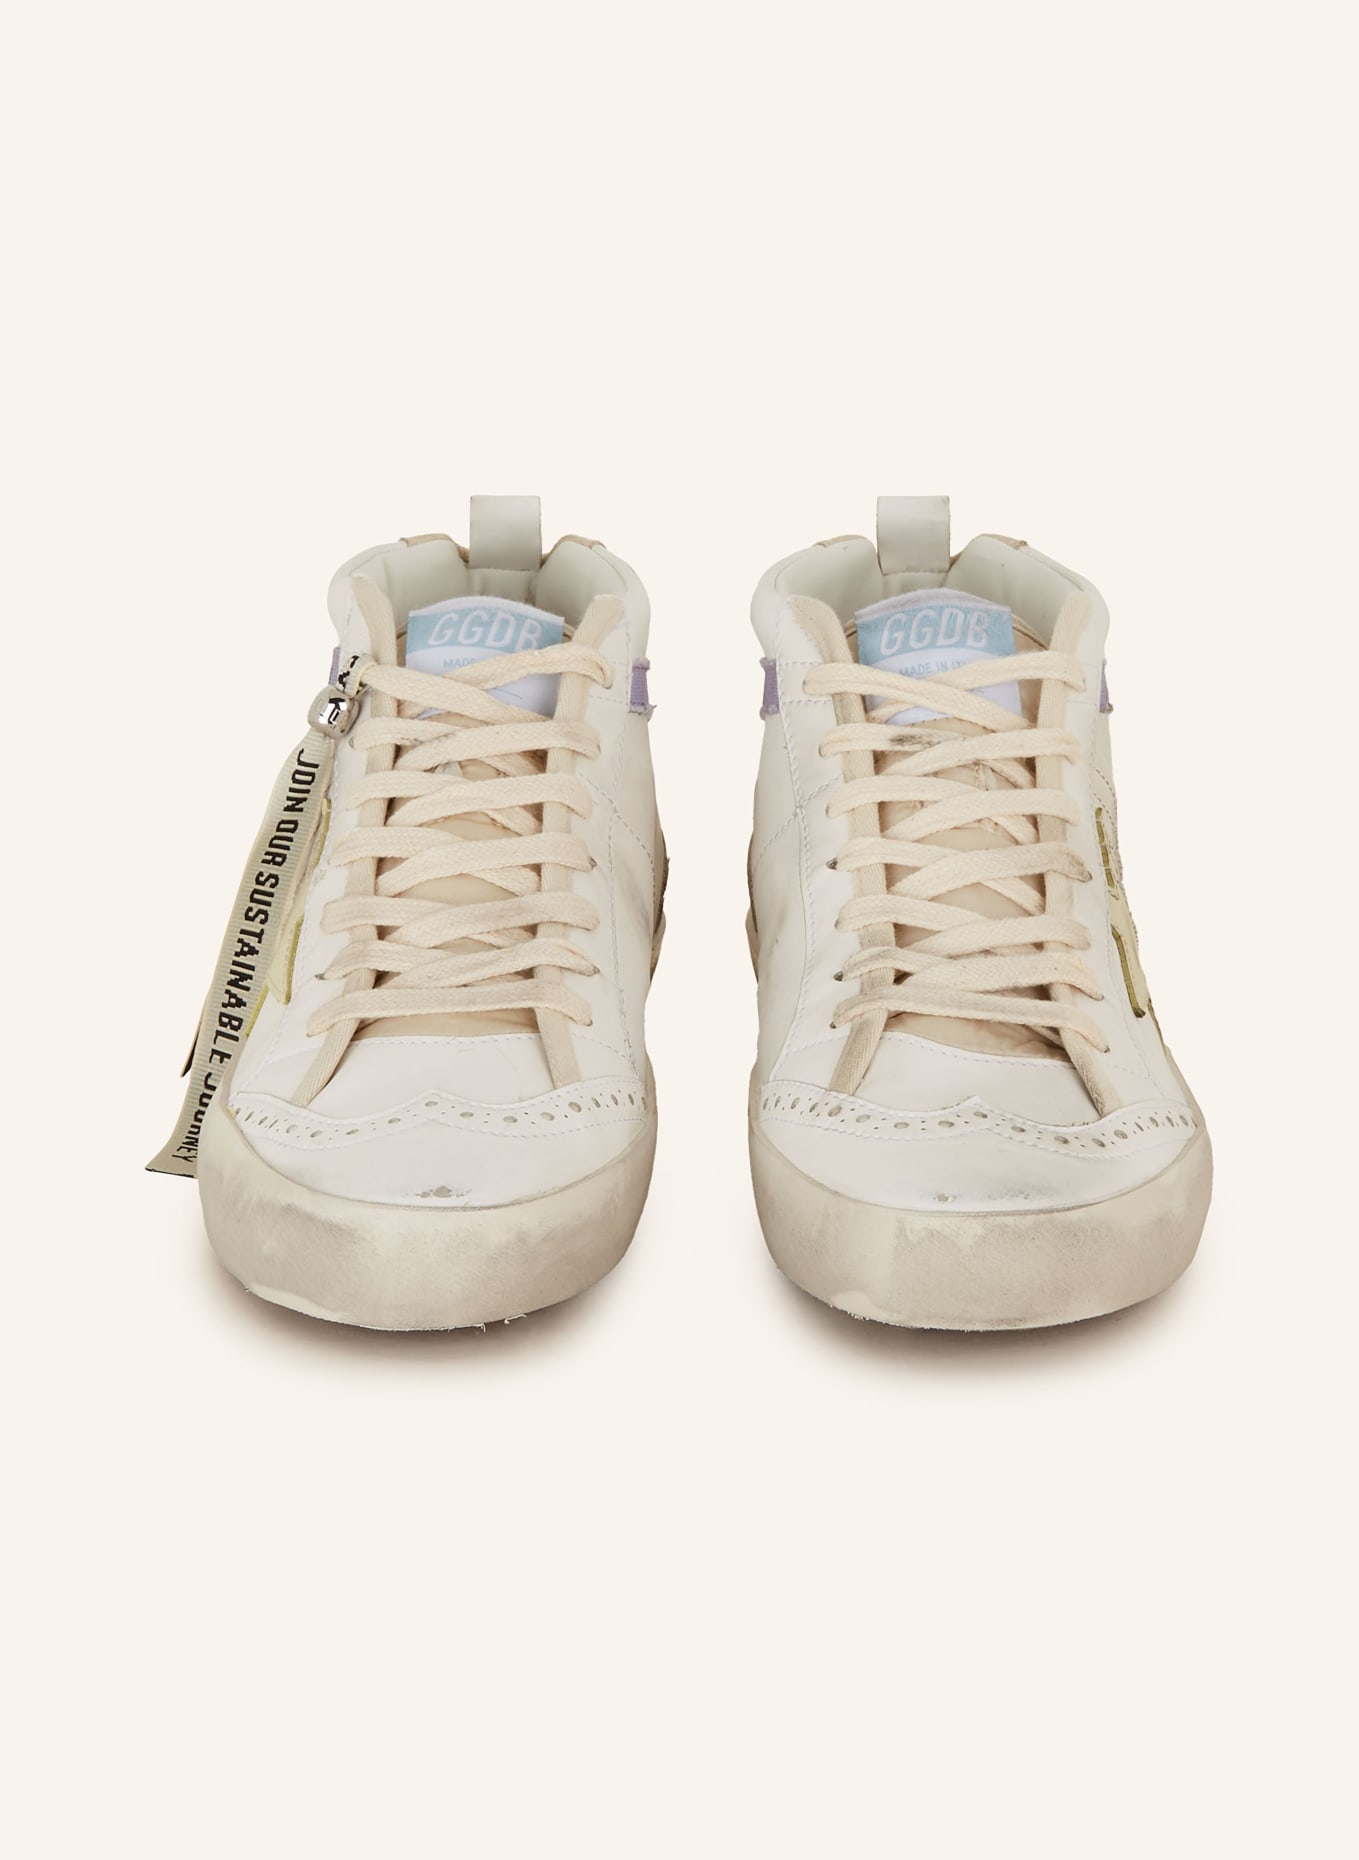 GOLDEN GOOSE Hightop-Sneaker MID STAR, Farbe: WEISS/ CREME/ HELLLILA (Bild 3)